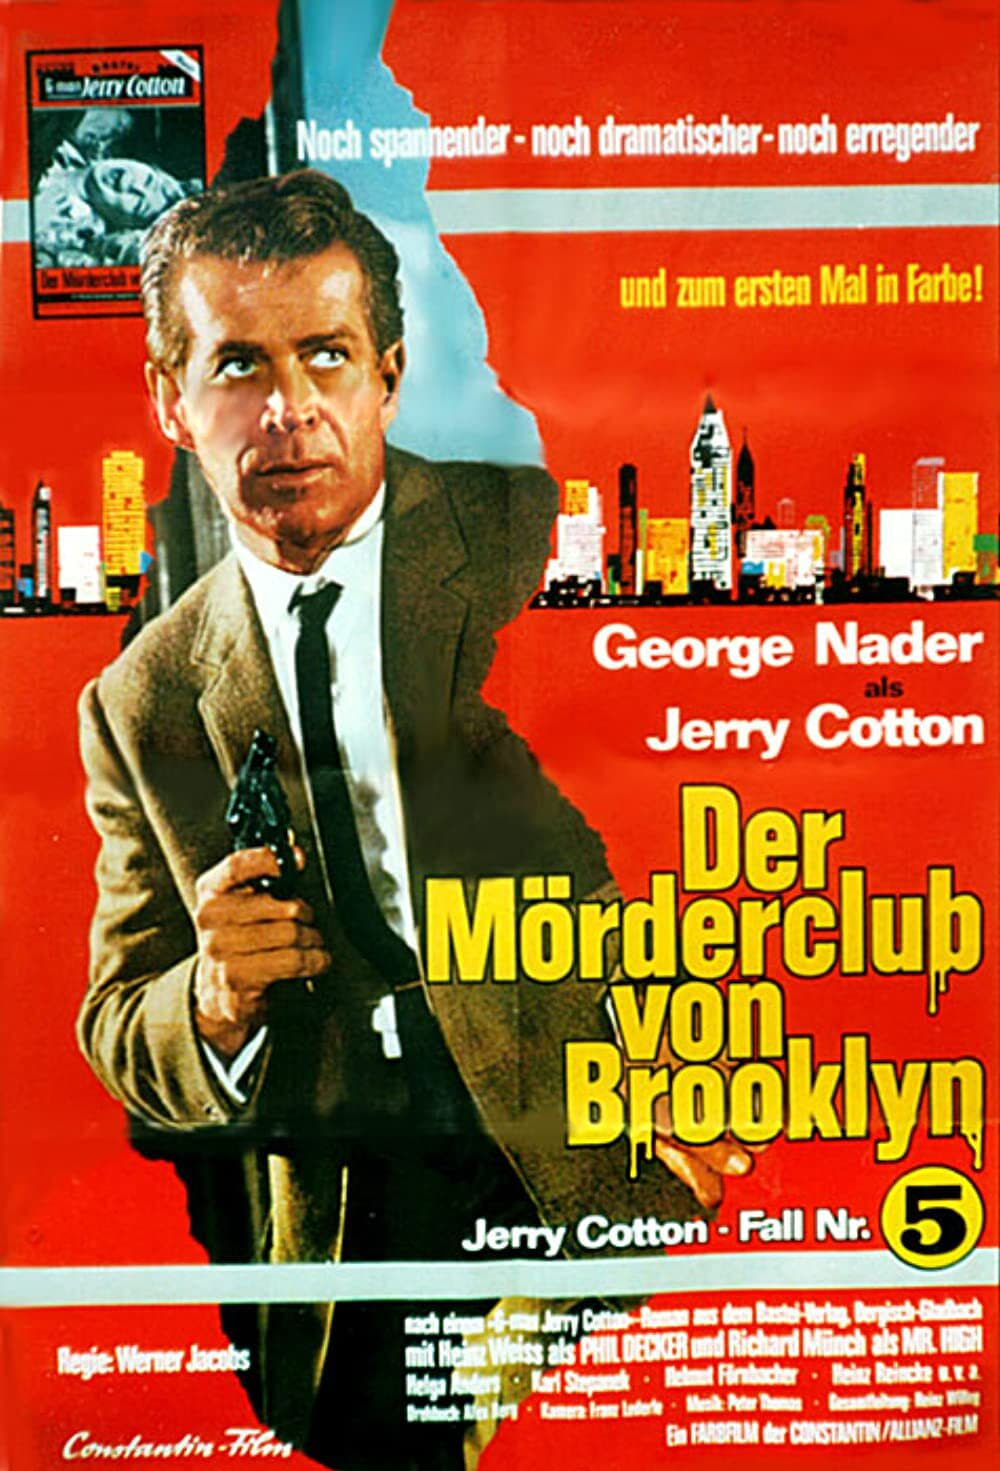 Jerry Cotton: Murderclub Of Brooklyn (1967)